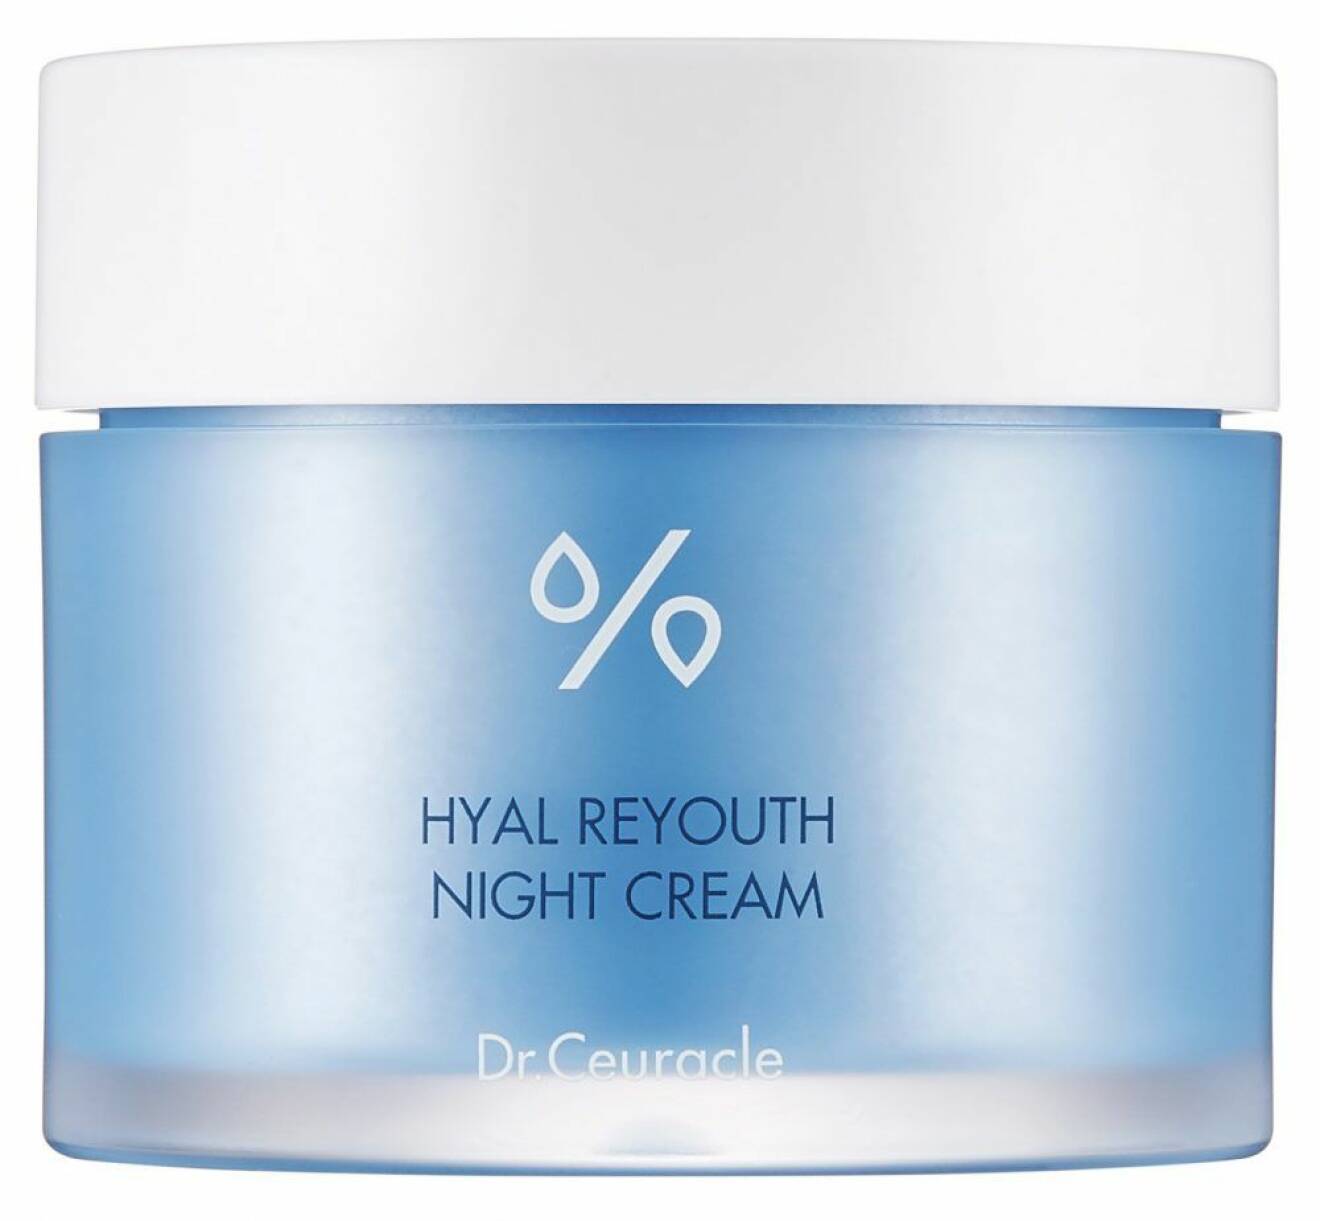 Hyal reyouth night cream, Dr Ceuracle